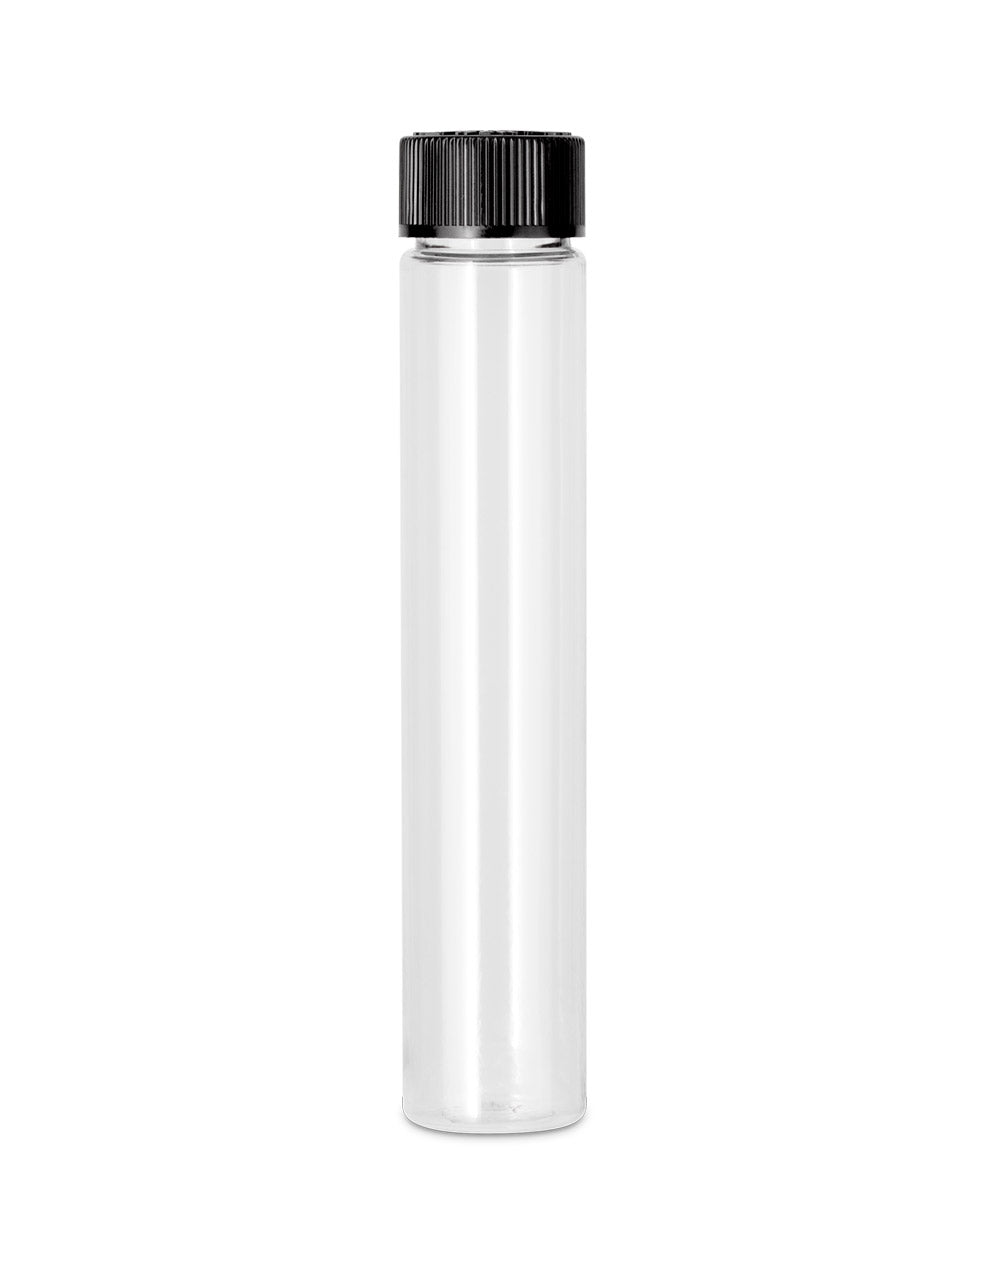 Pre-Roll & Vape Bottles - Plastic - Disposable Vape Pen Container